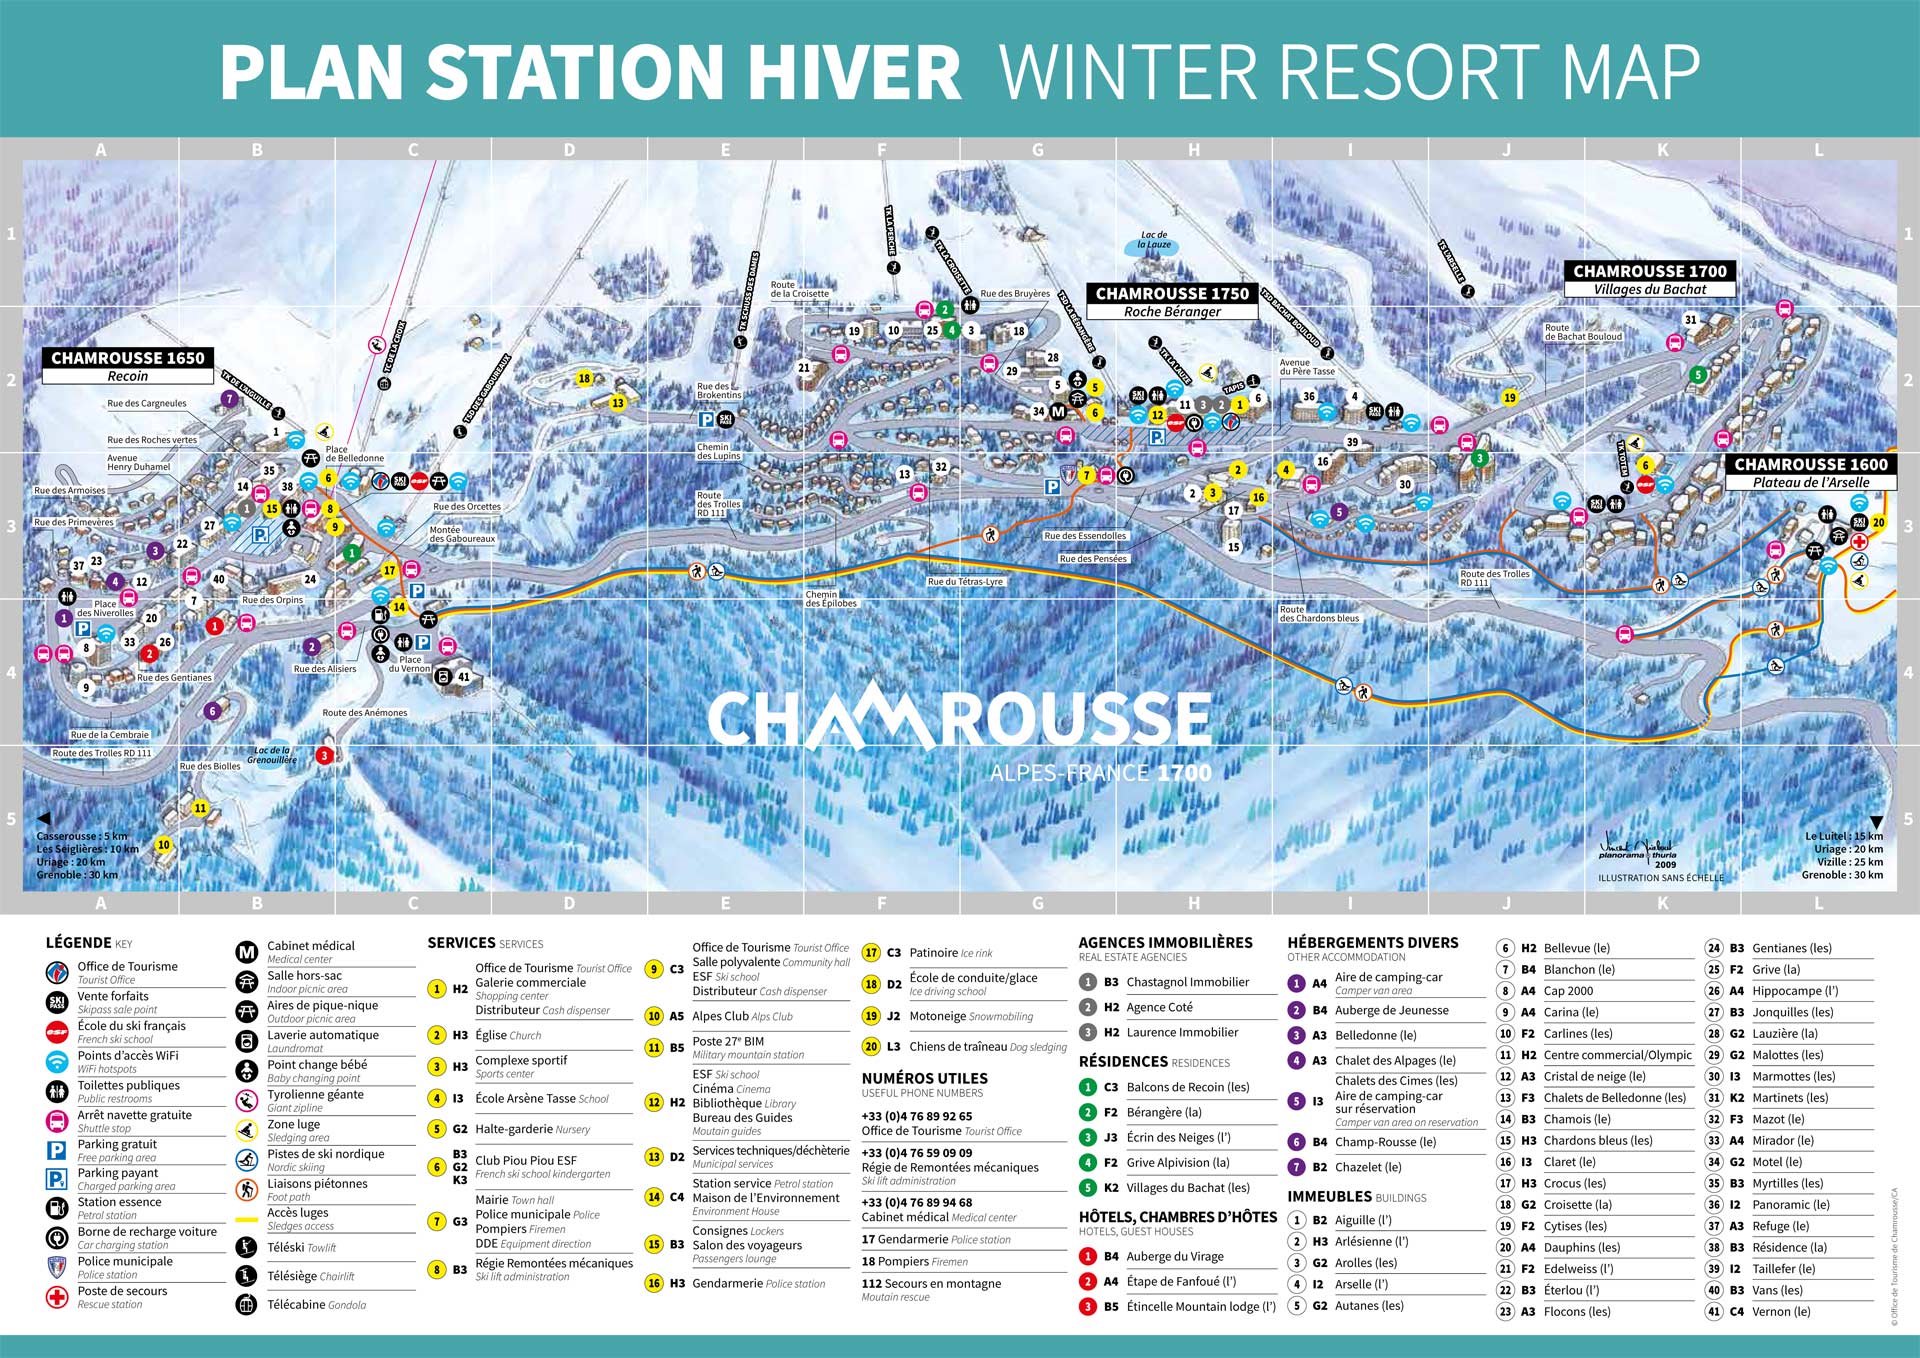 Chamrousse plan station hiver ski montagne grenoble isère lyon rhone alpes france - © CA - OT Chamrousse / Kaliblue